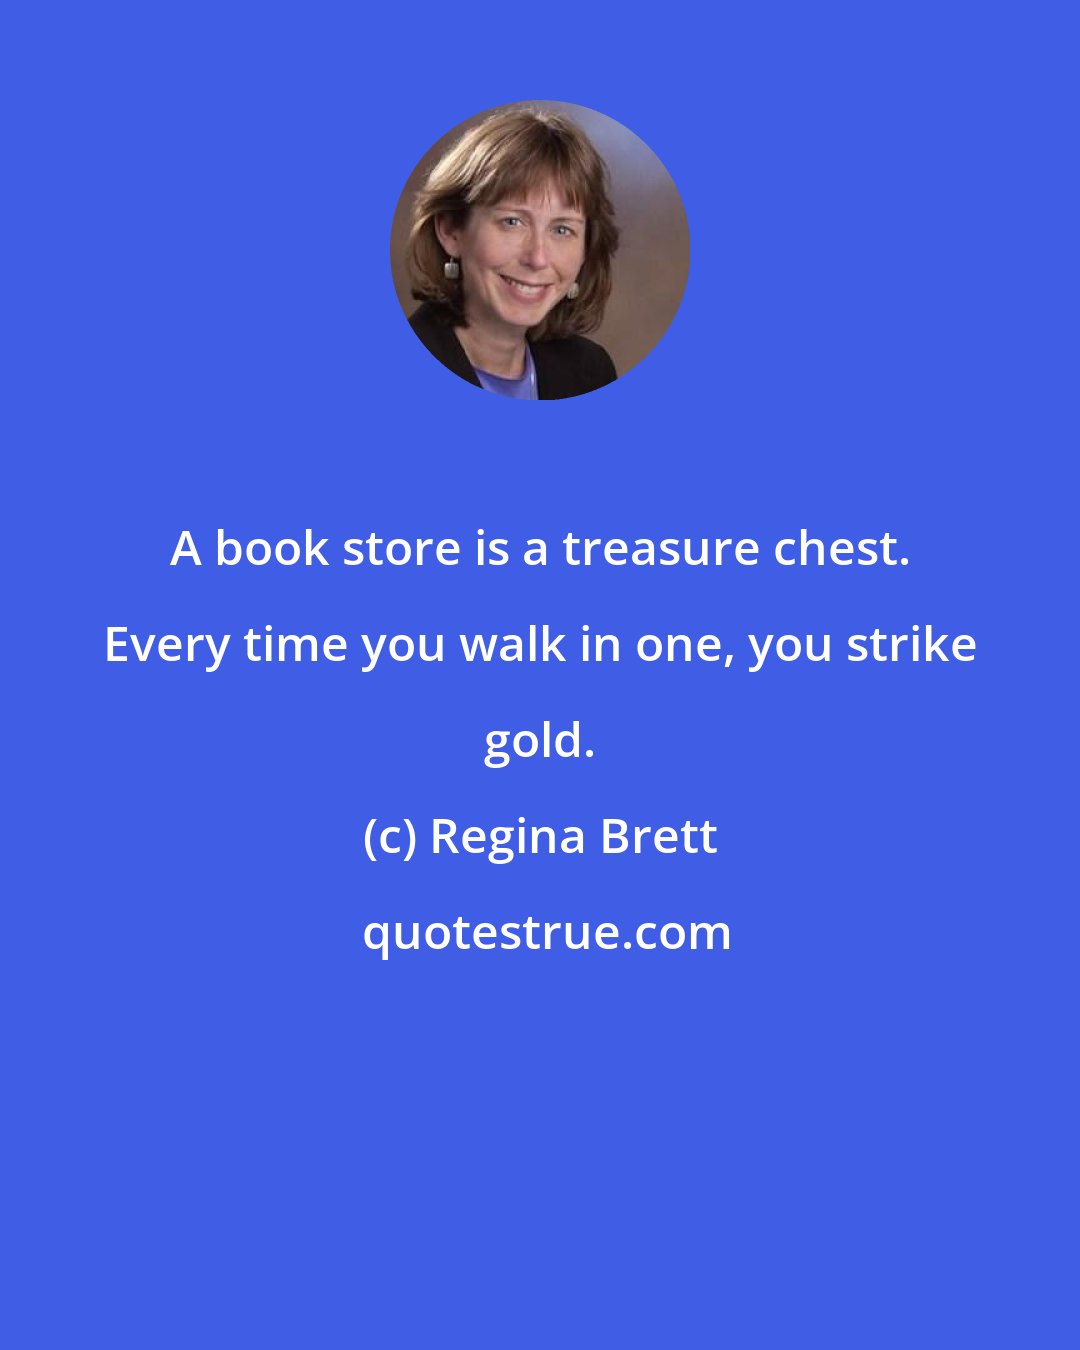 Regina Brett: A book store is a treasure chest. Every time you walk in one, you strike gold.